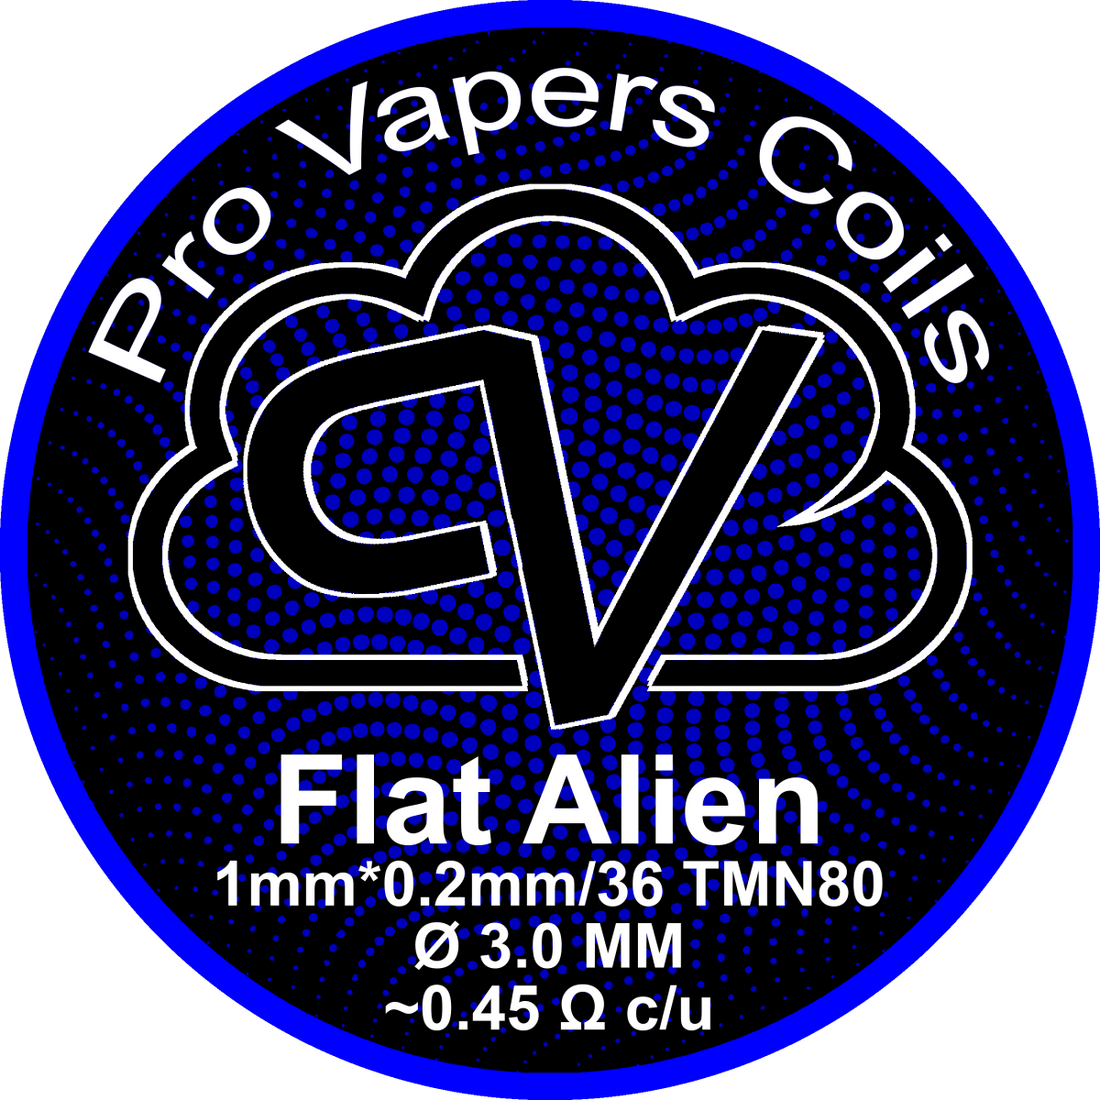 Flat Alien - Pro Vapers - Resistencias Artesanales - DIY VAPE SHOP | RA-PVC-FA-01